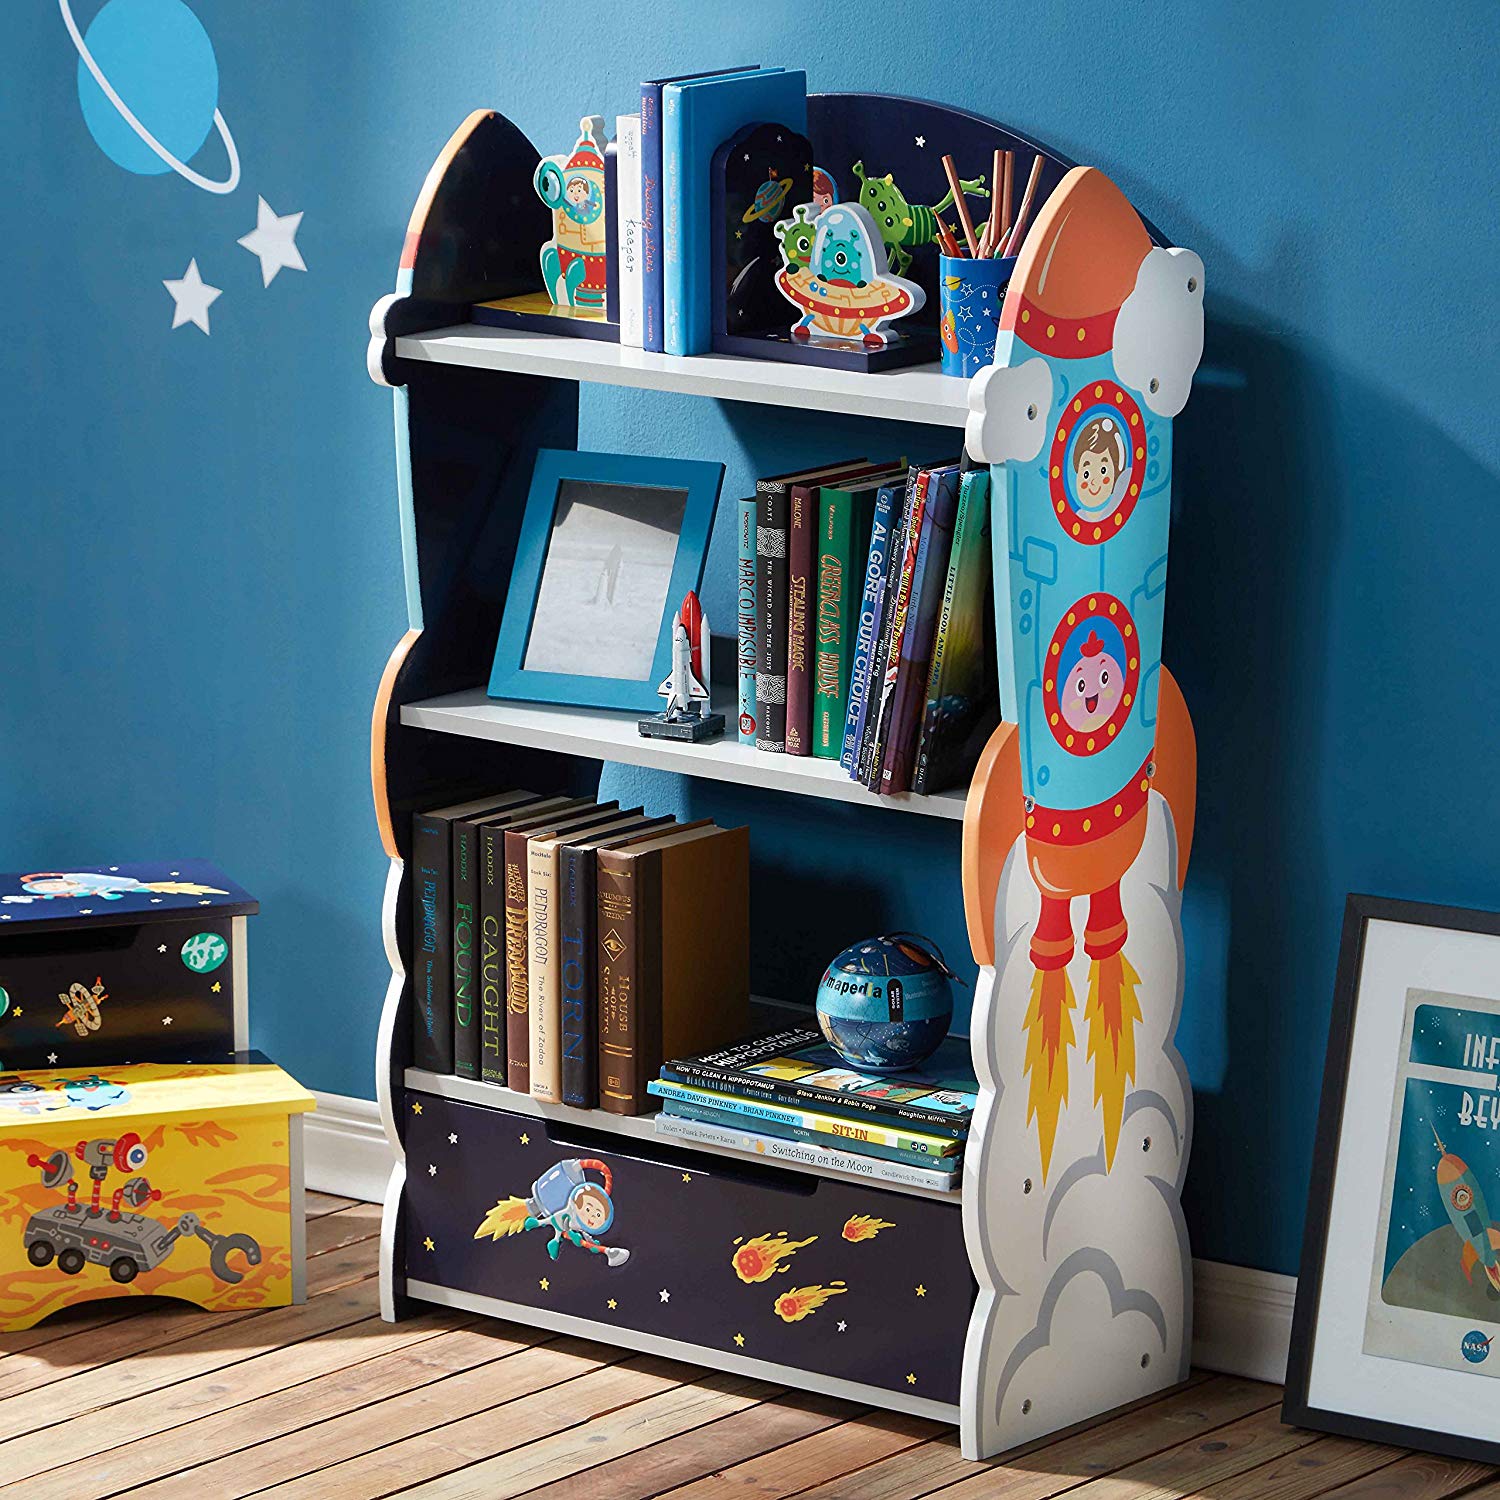 Bookshelves 5 Fun Furniture Ideas for Kids - 1